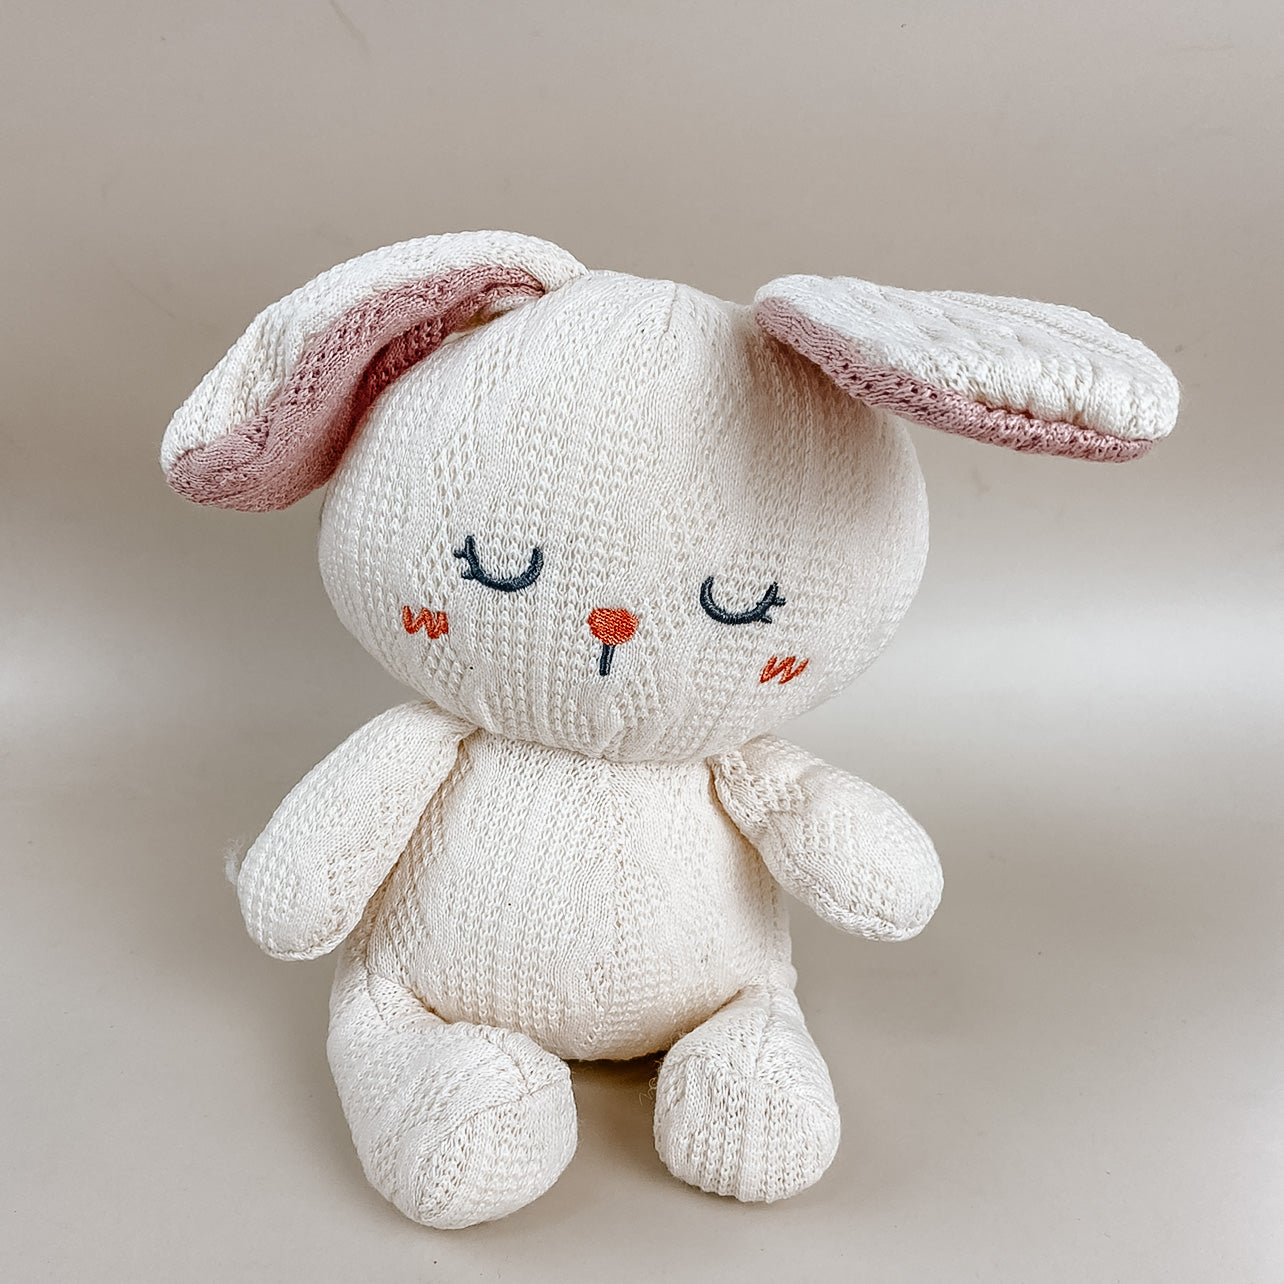 Super Soft Knitted Animal Plush Stuffed Toy